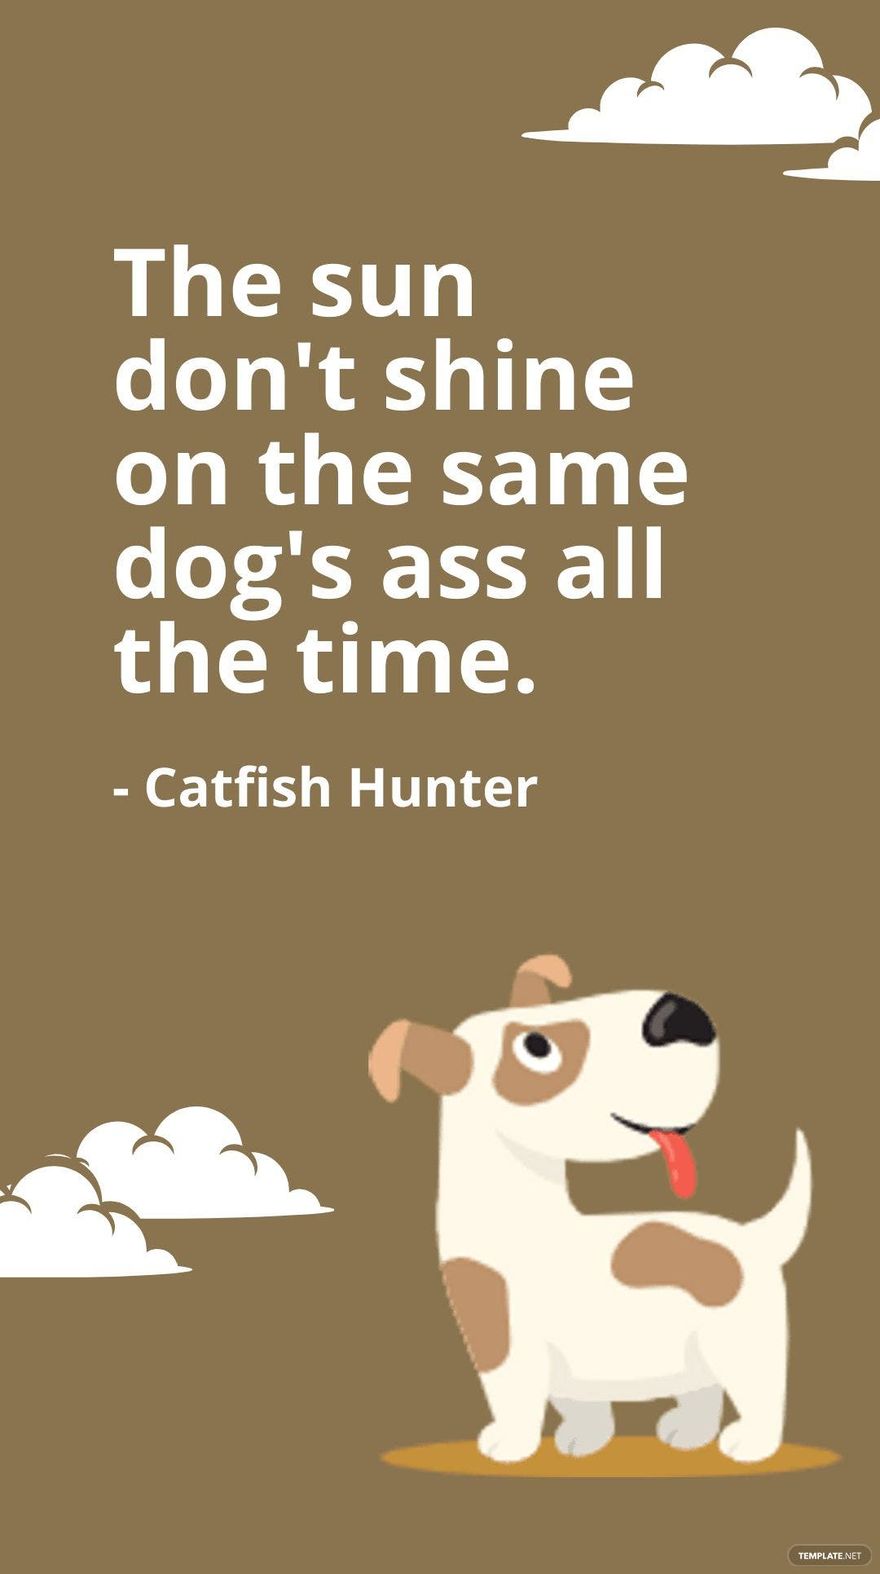 Catfish Hunter - The sun don't shine on the same dog's ass all the time.